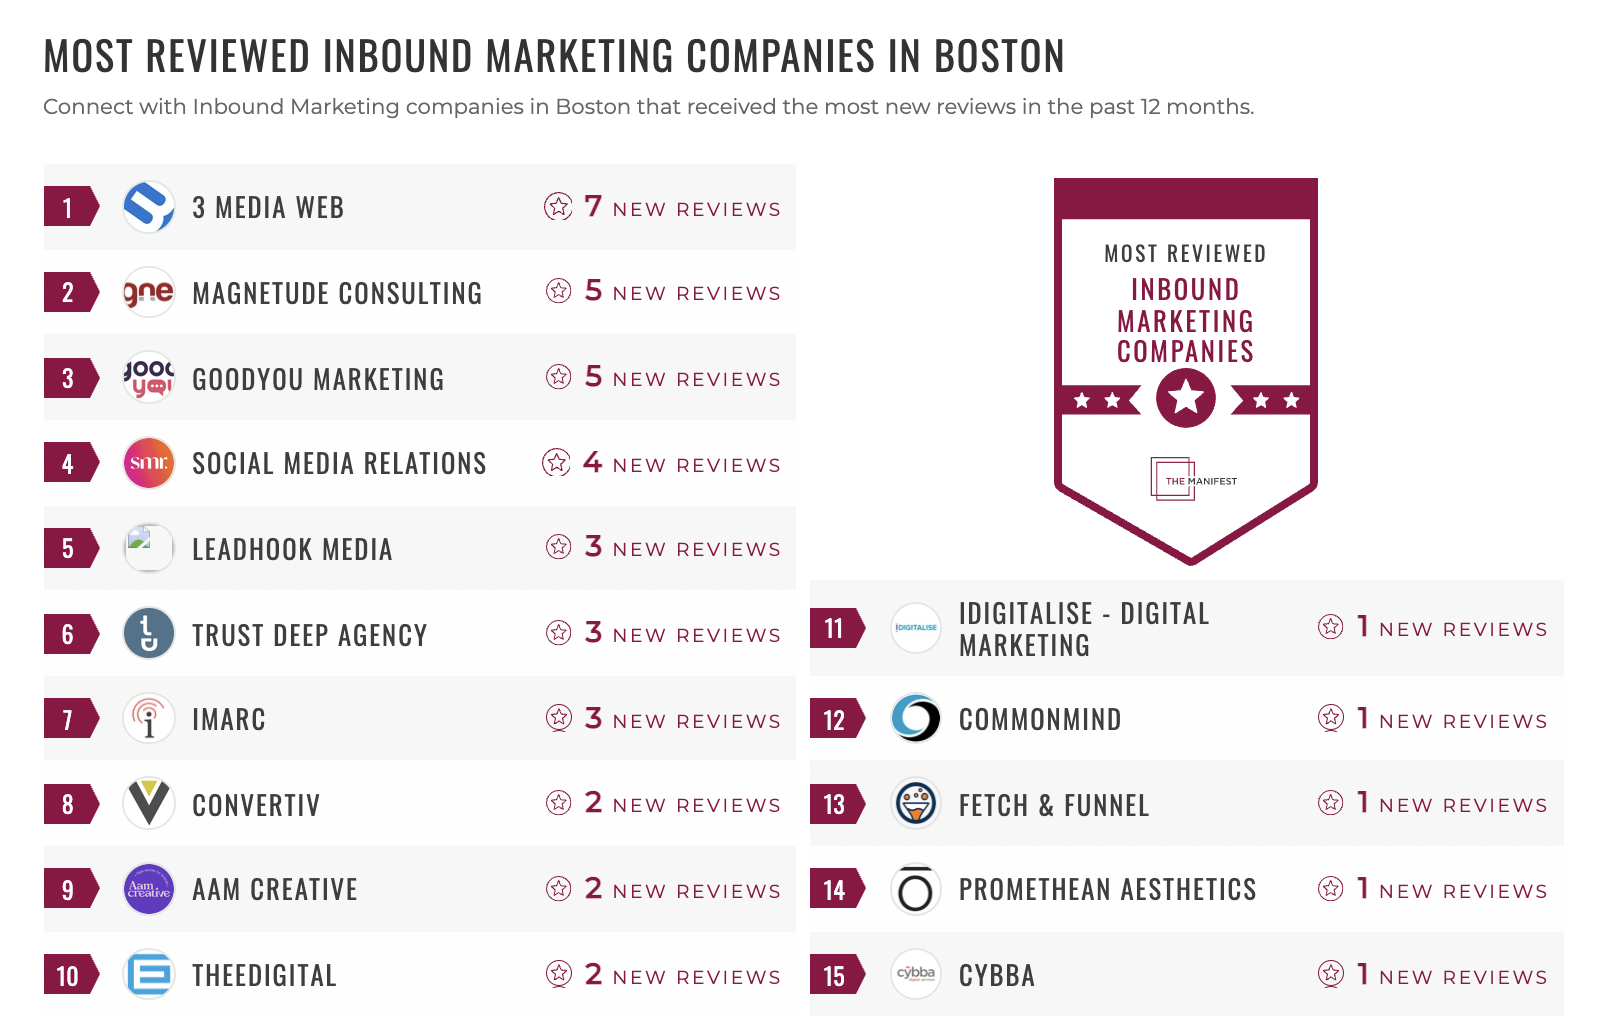 Most Reviewed Inbound Marketing Companies in Boston